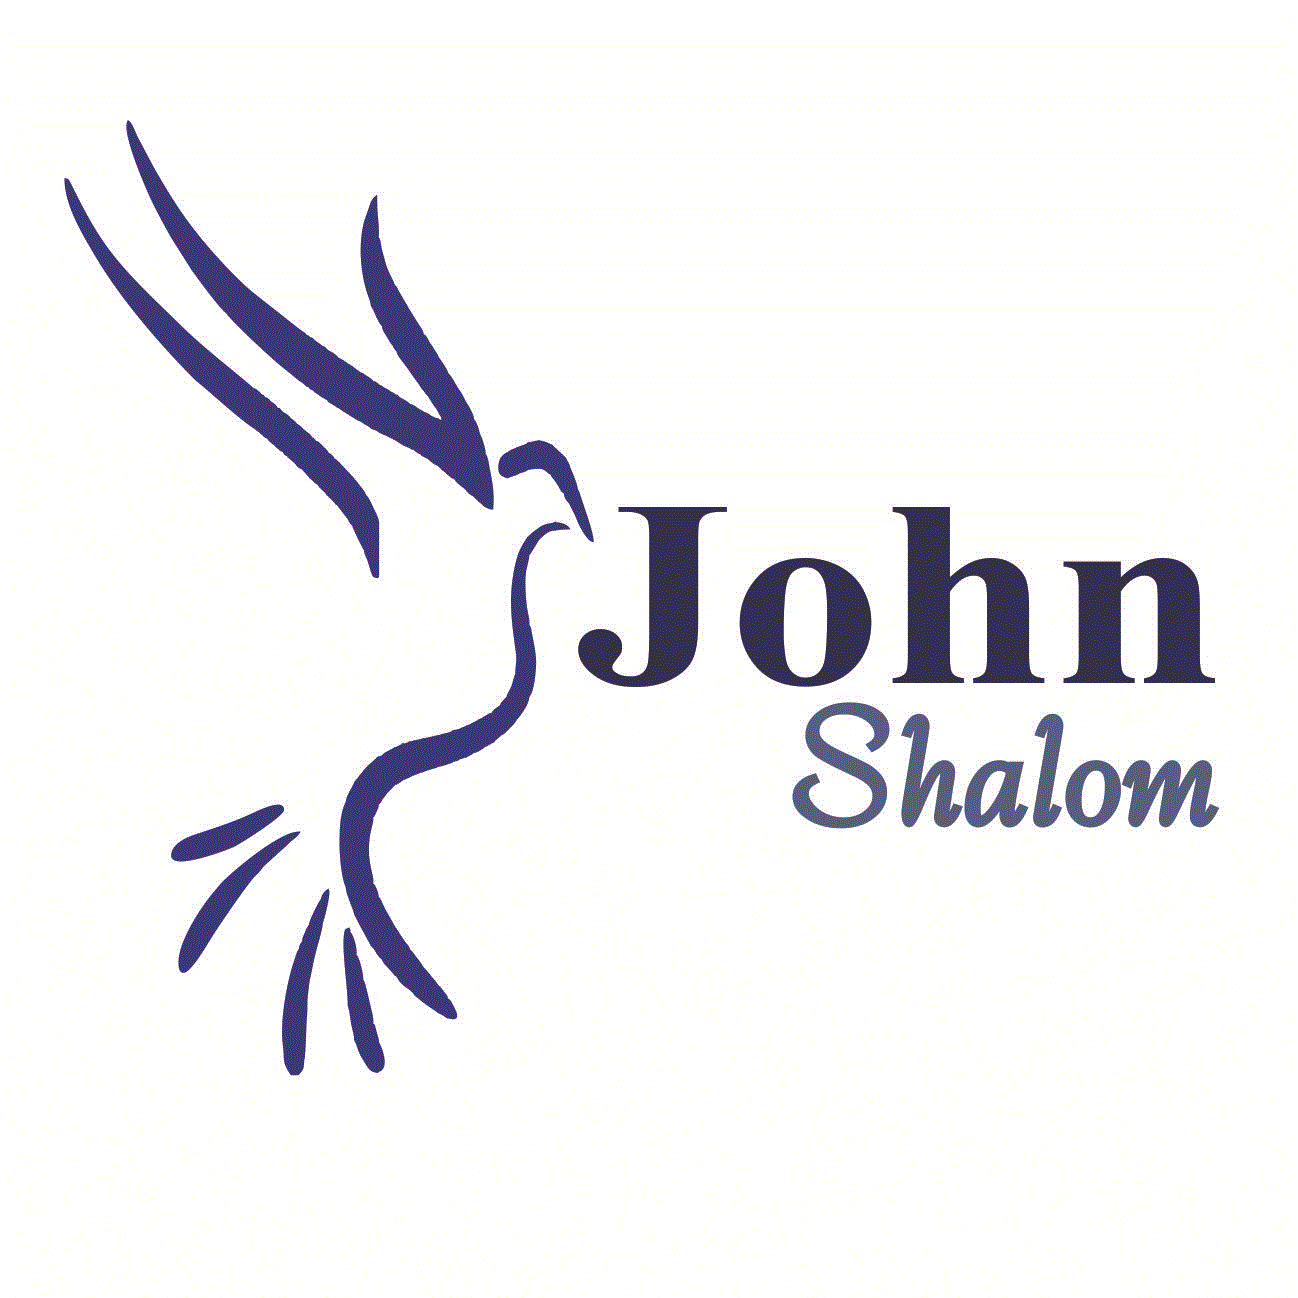 Shalom Logo - John Shalom Walkthroughs with Tips and Tricks (5 steps)